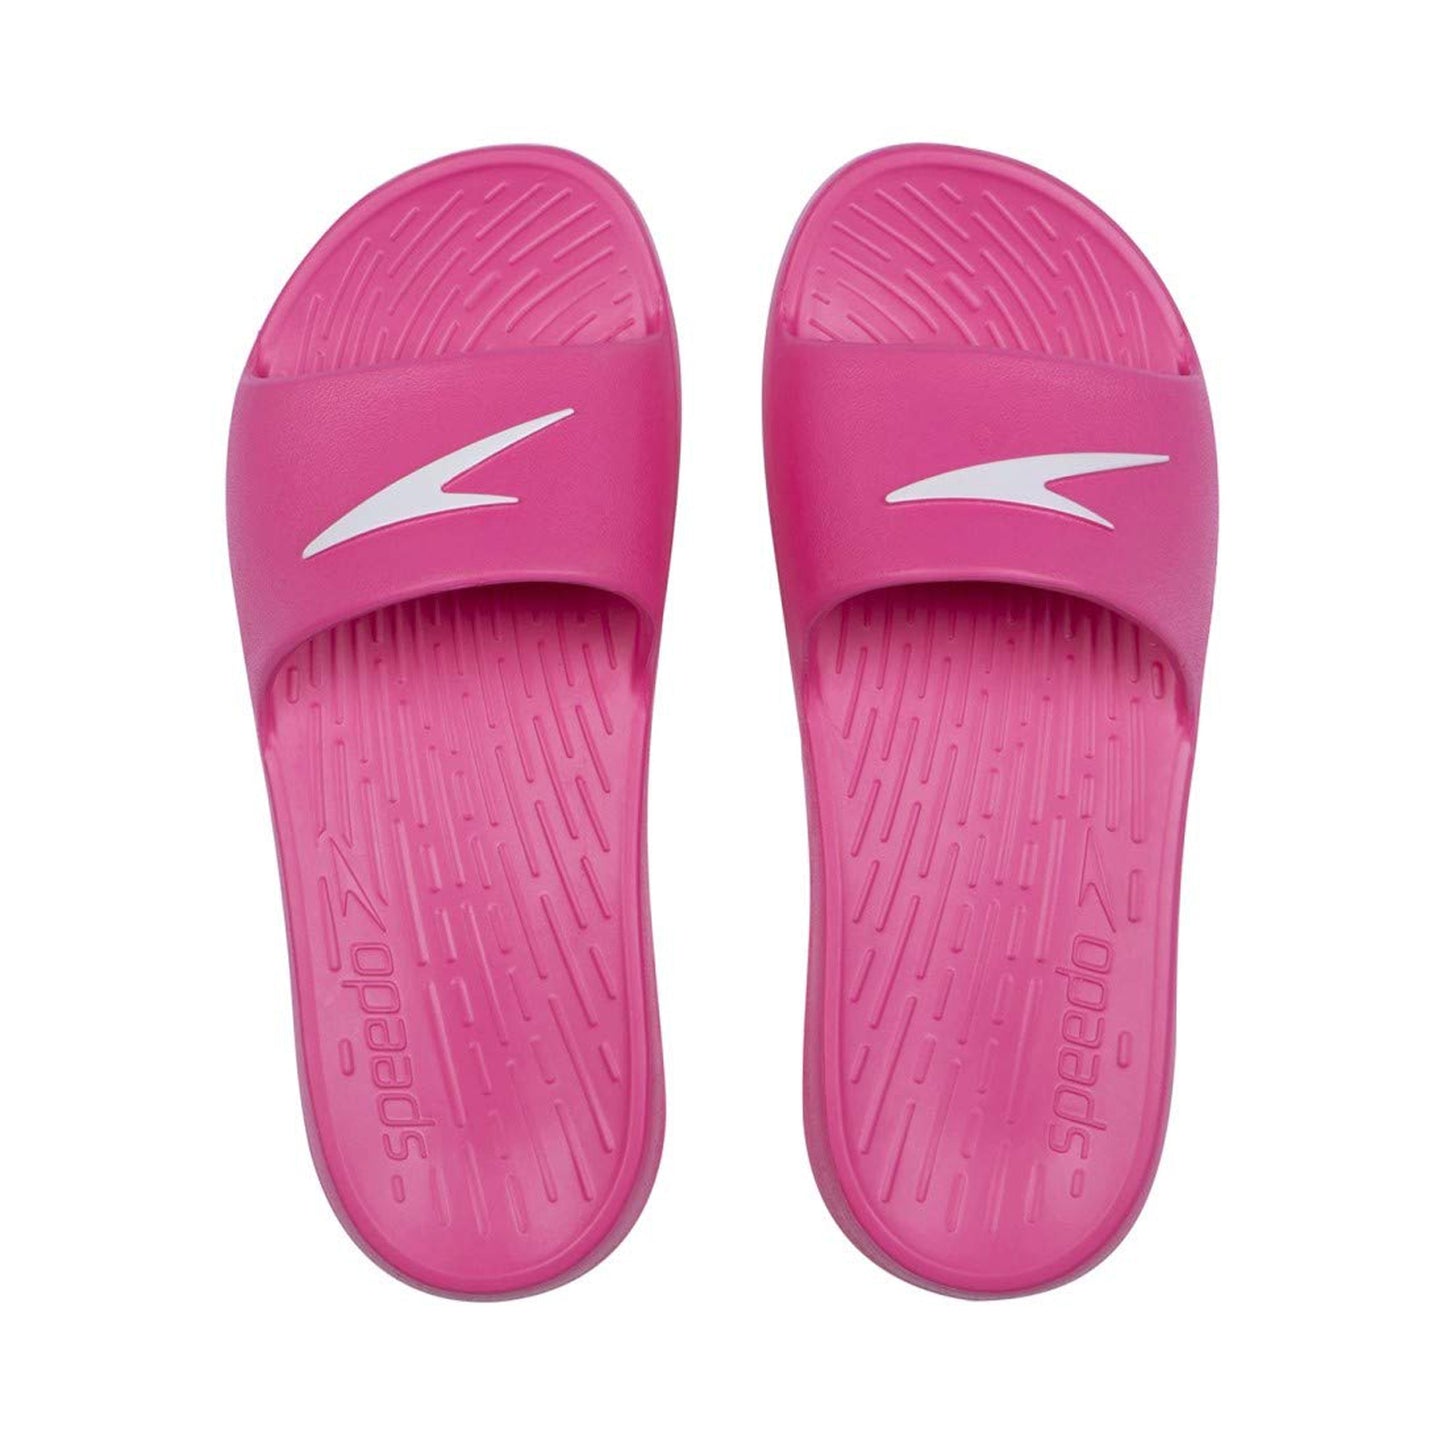 Speedo Single Colour Slide, Electric Pink/White - Best Price online Prokicksports.com